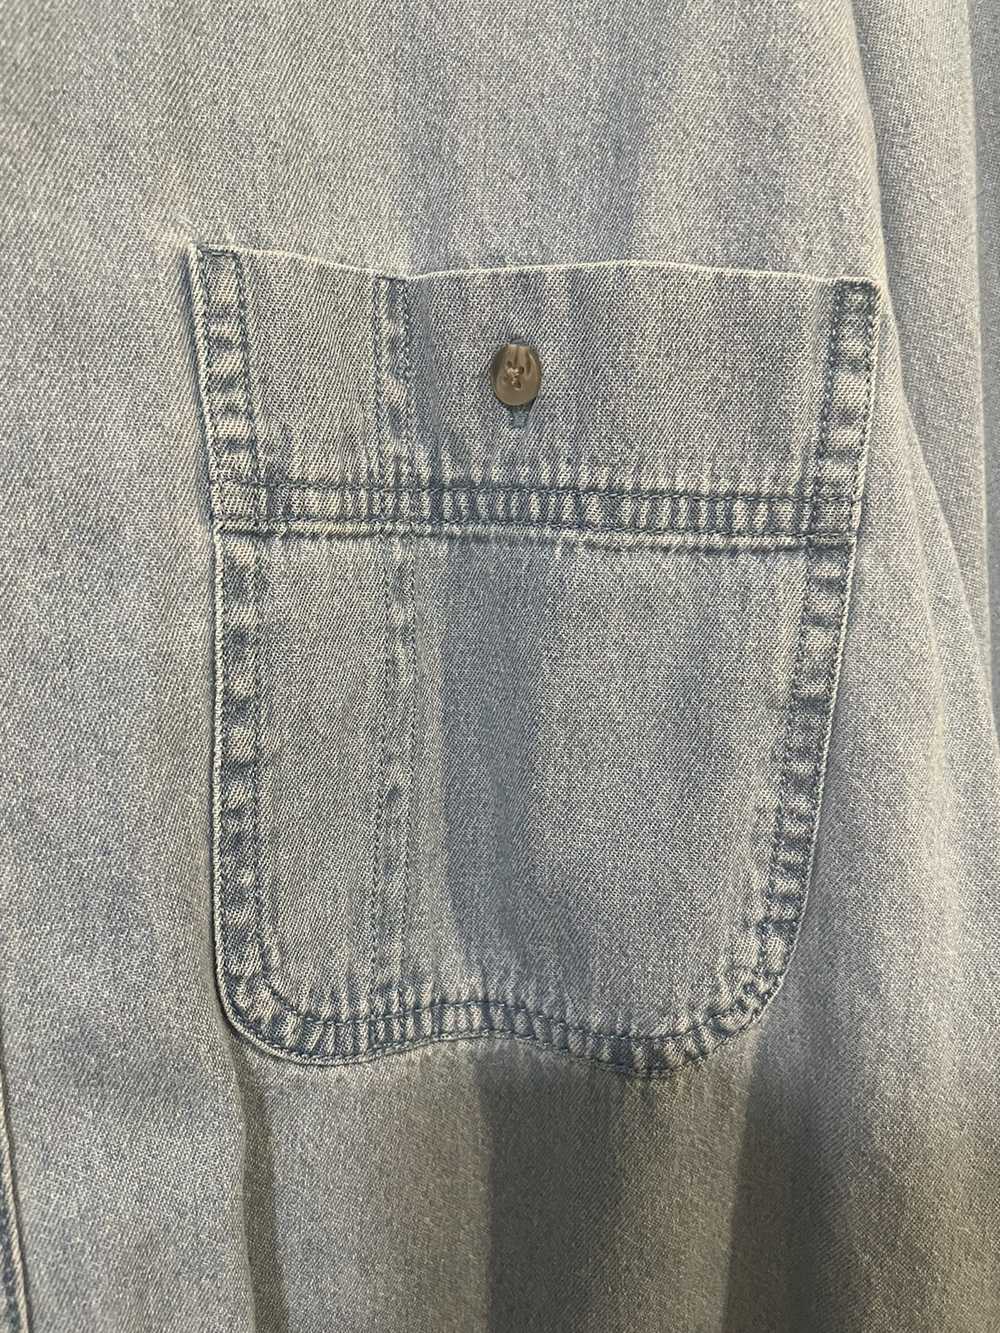 Wrangler Vintage Wrangler Denim Button Up Shirt - image 4